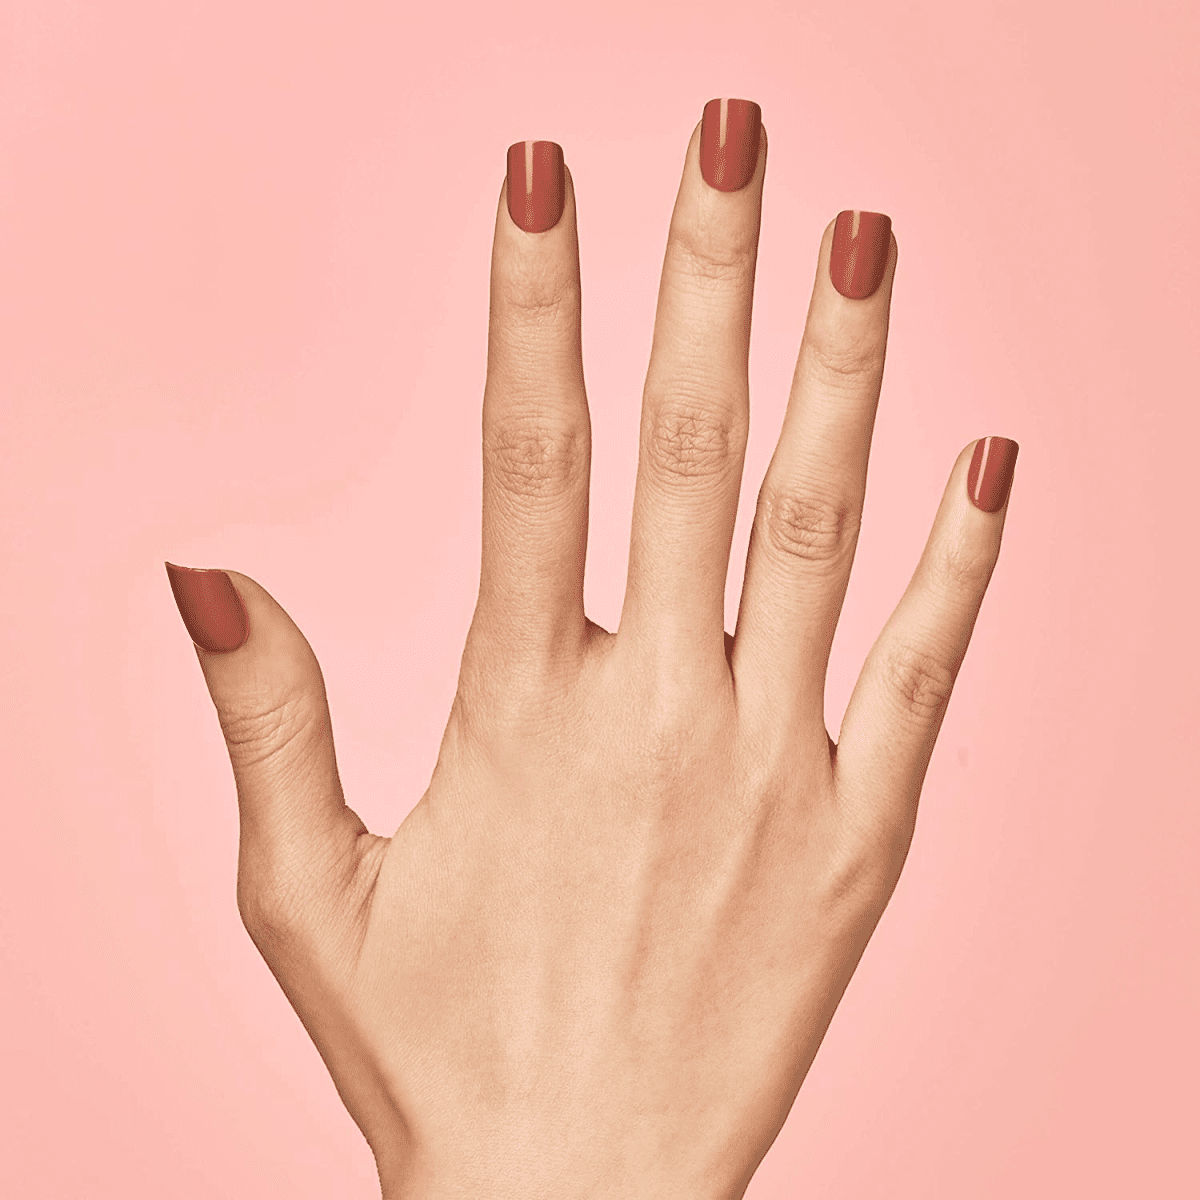 imPRESS Color Press-On Manicure - Platonic Pink